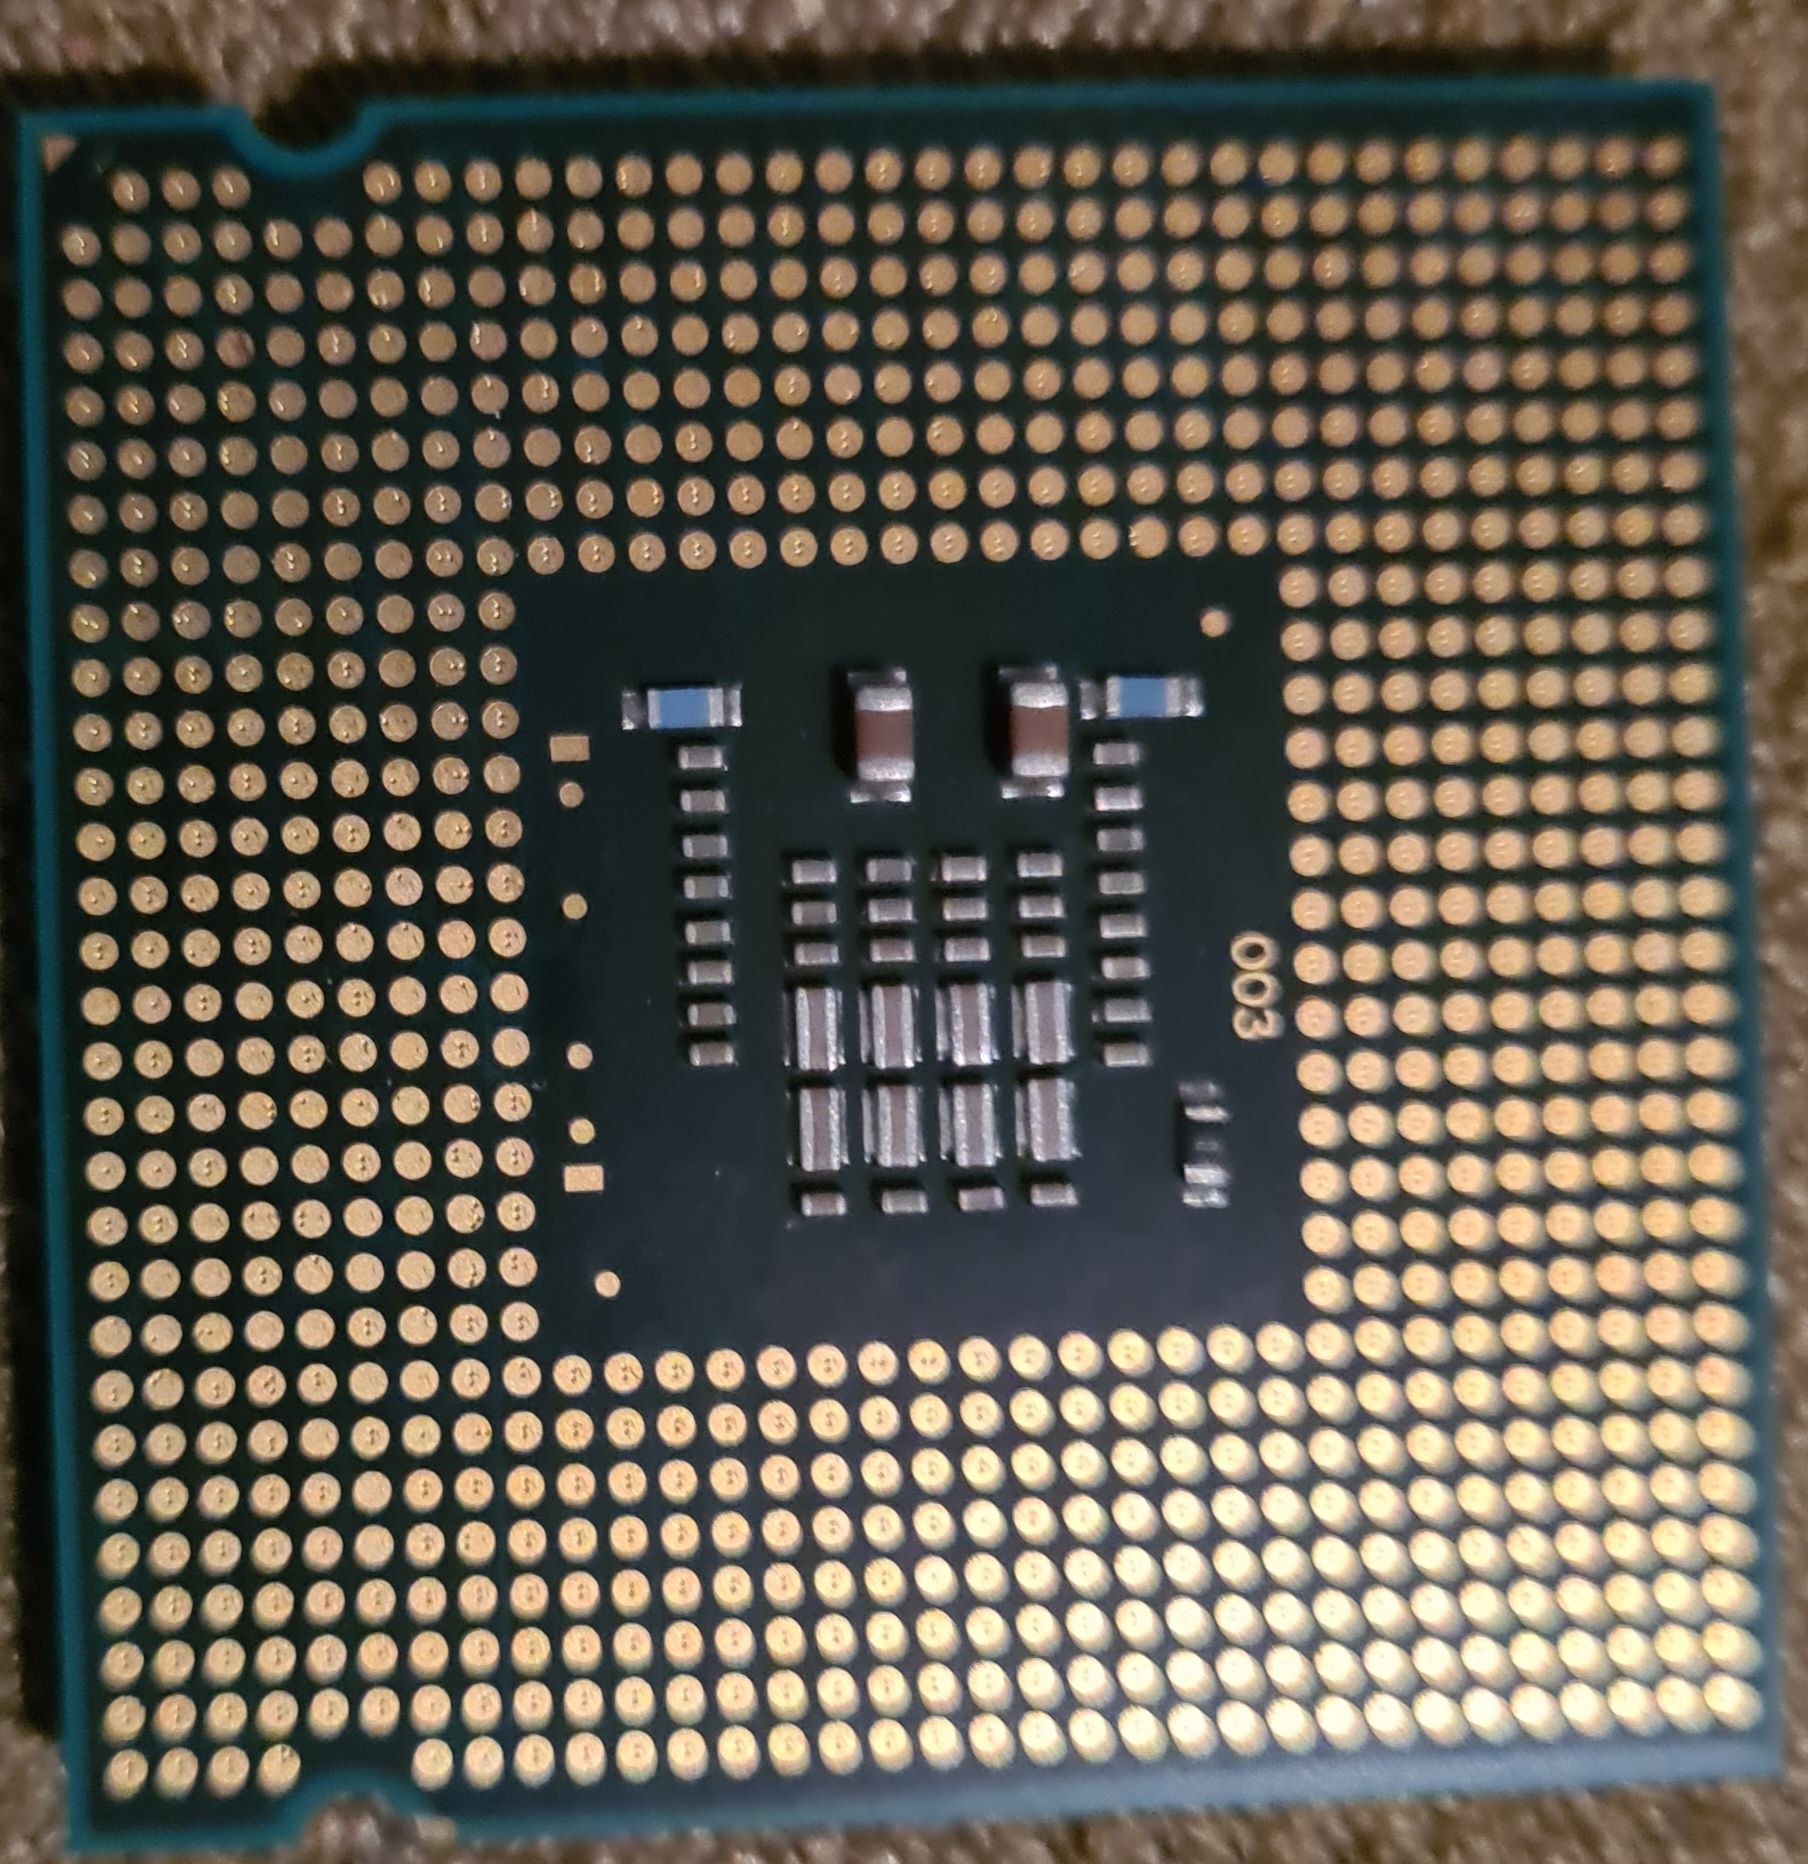 Procesor Intel Pentium Dual Core E5200, 2.5GHz